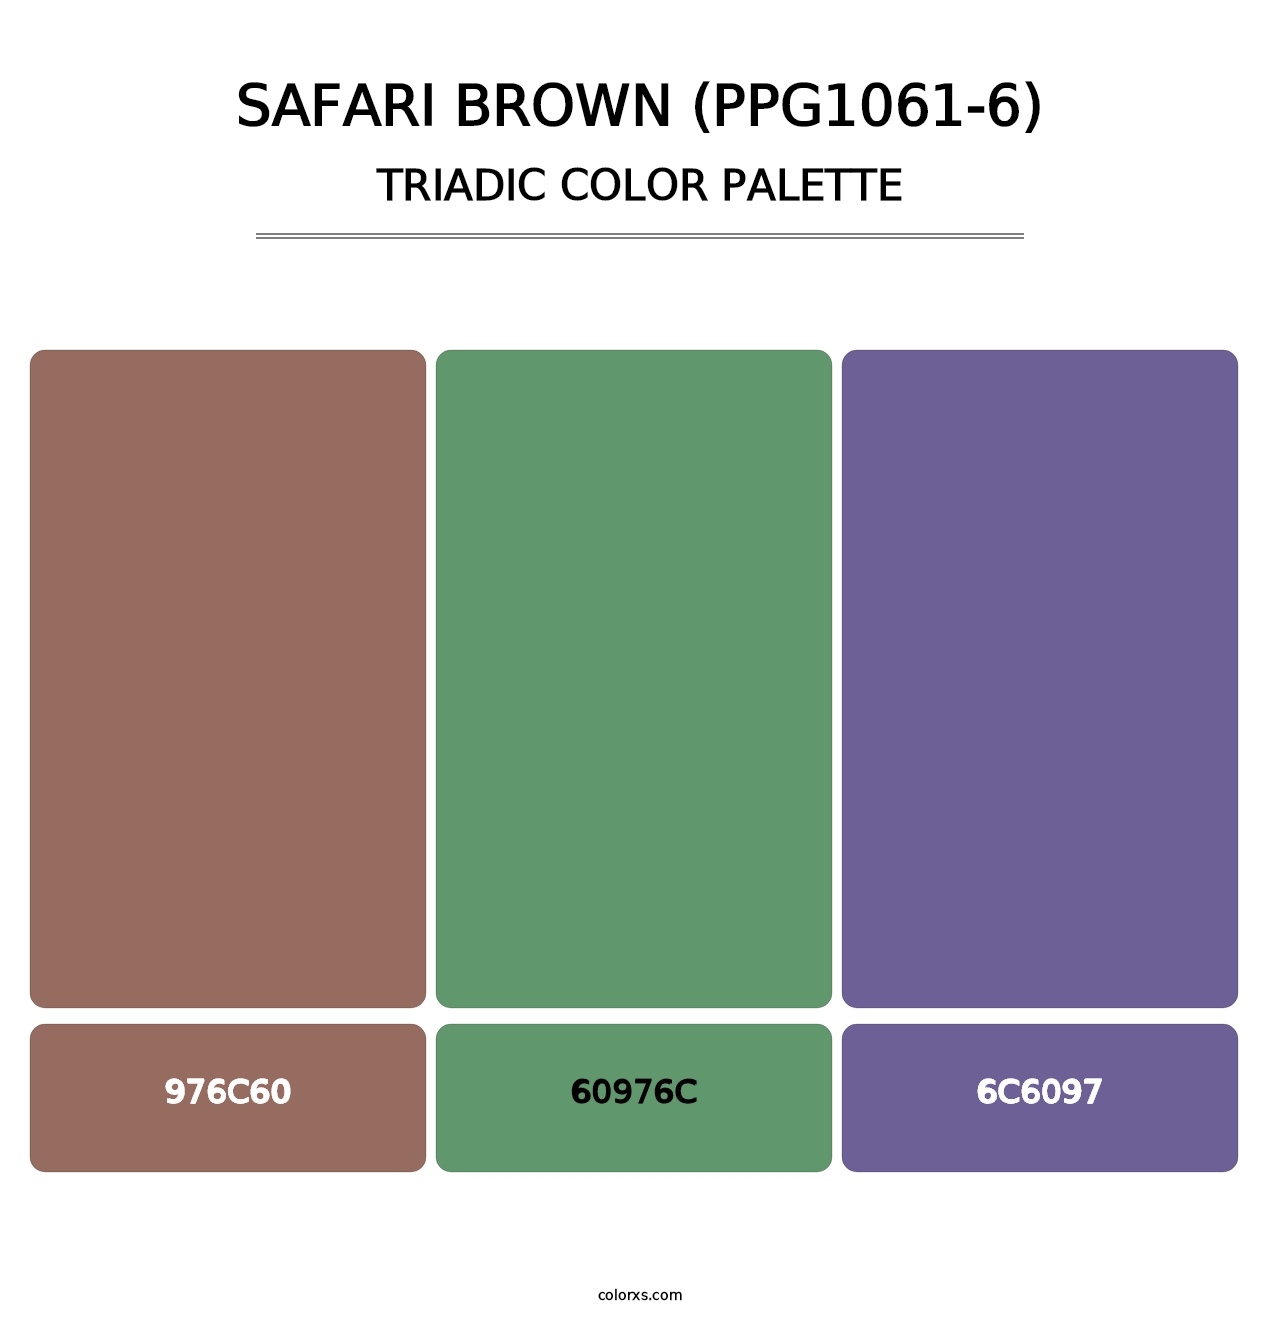 Safari Brown (PPG1061-6) - Triadic Color Palette